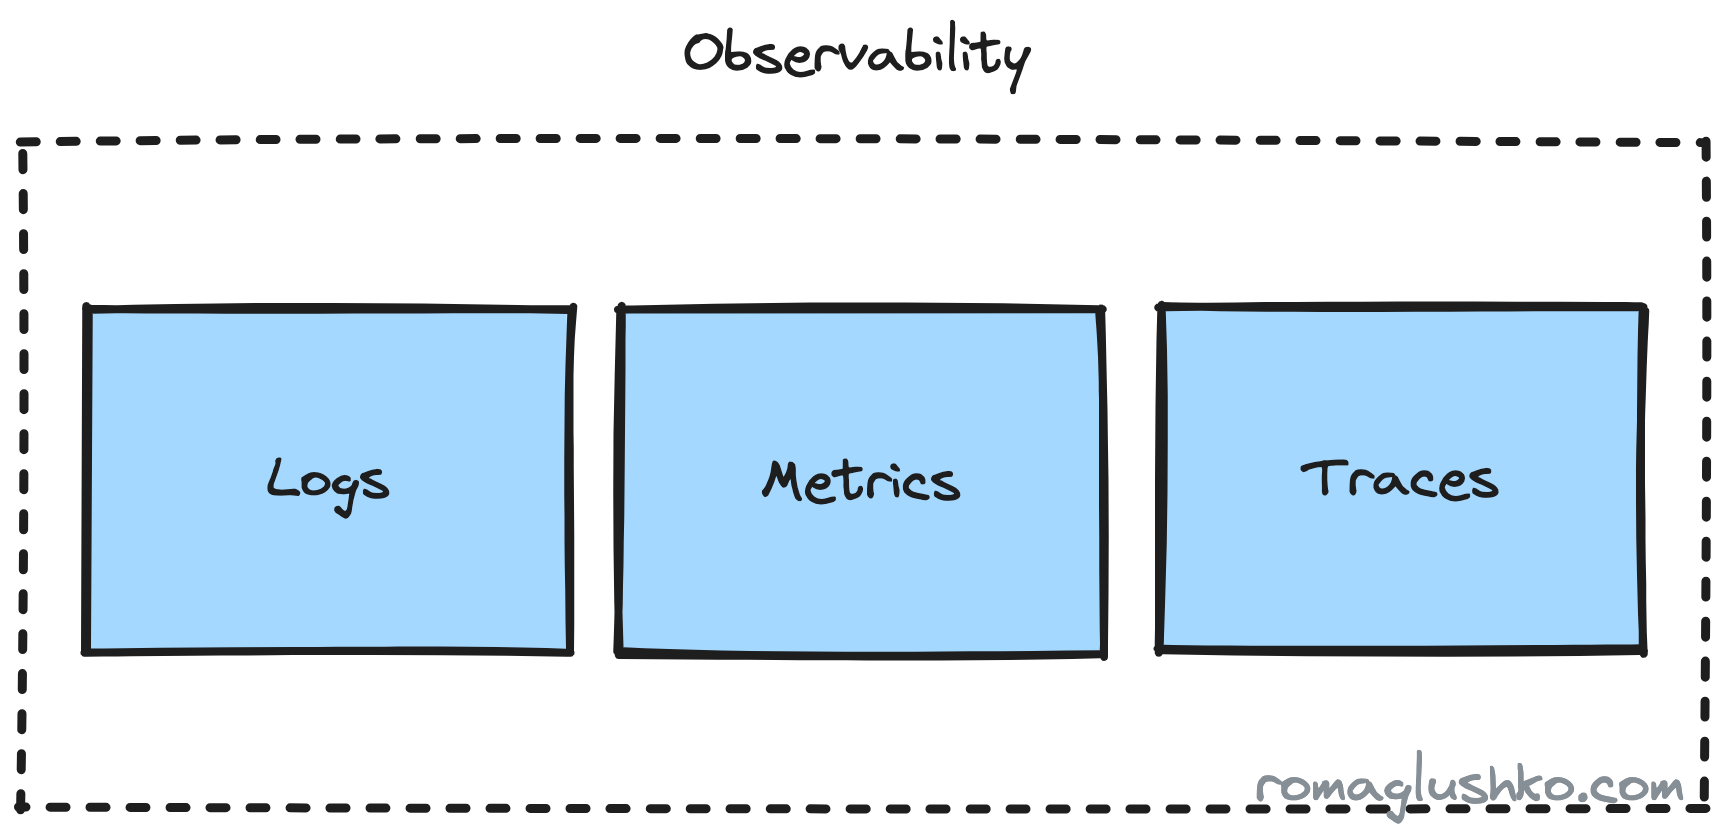 The Three Pillars of Observability